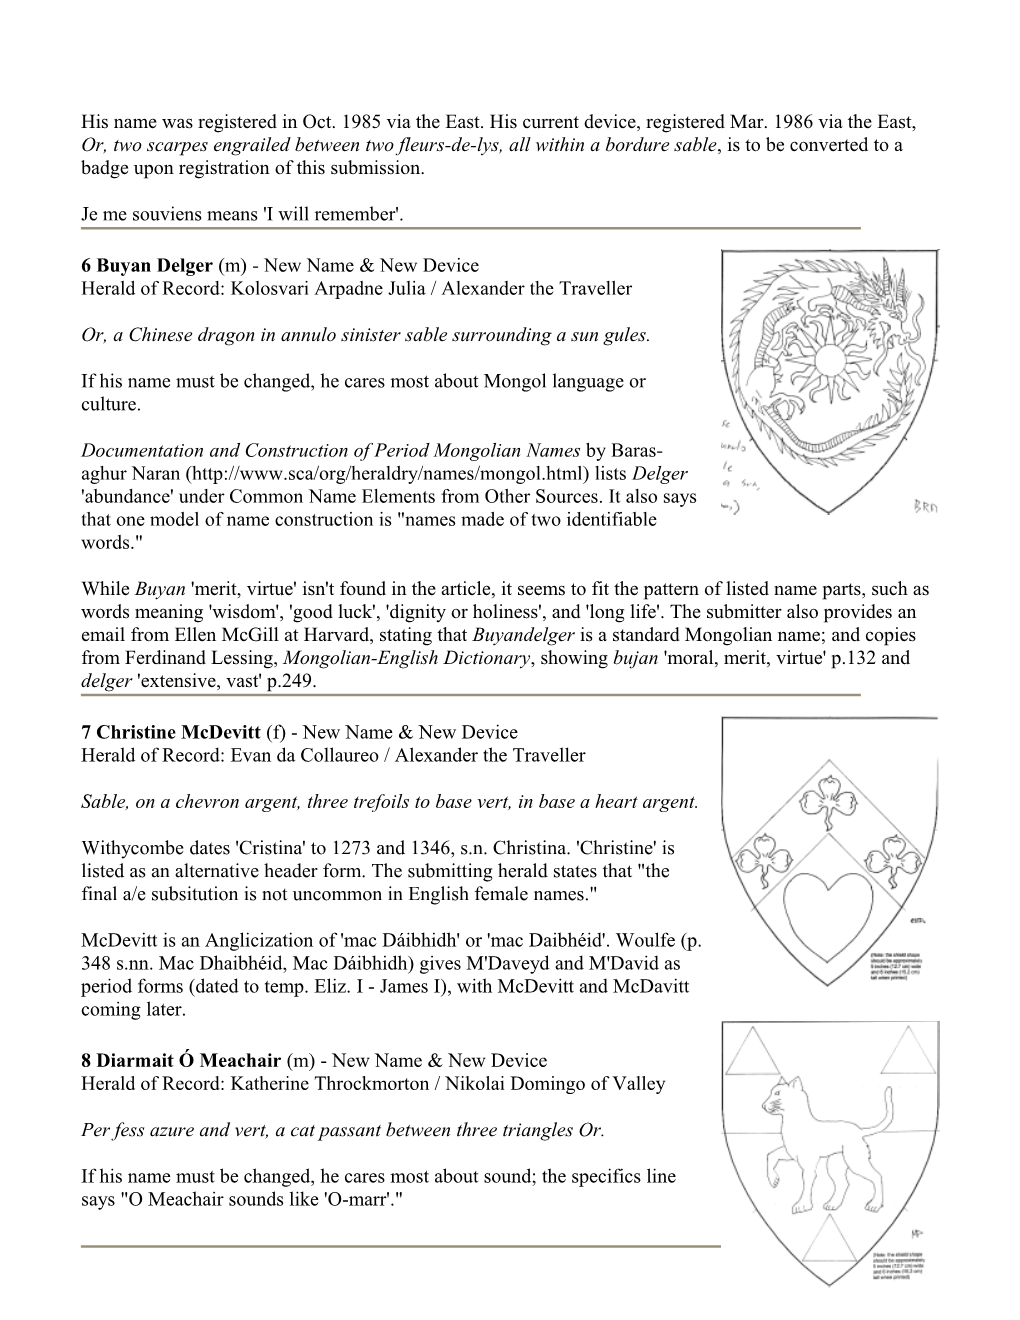 September 2006 East Kingdom Internal Letter of Intent